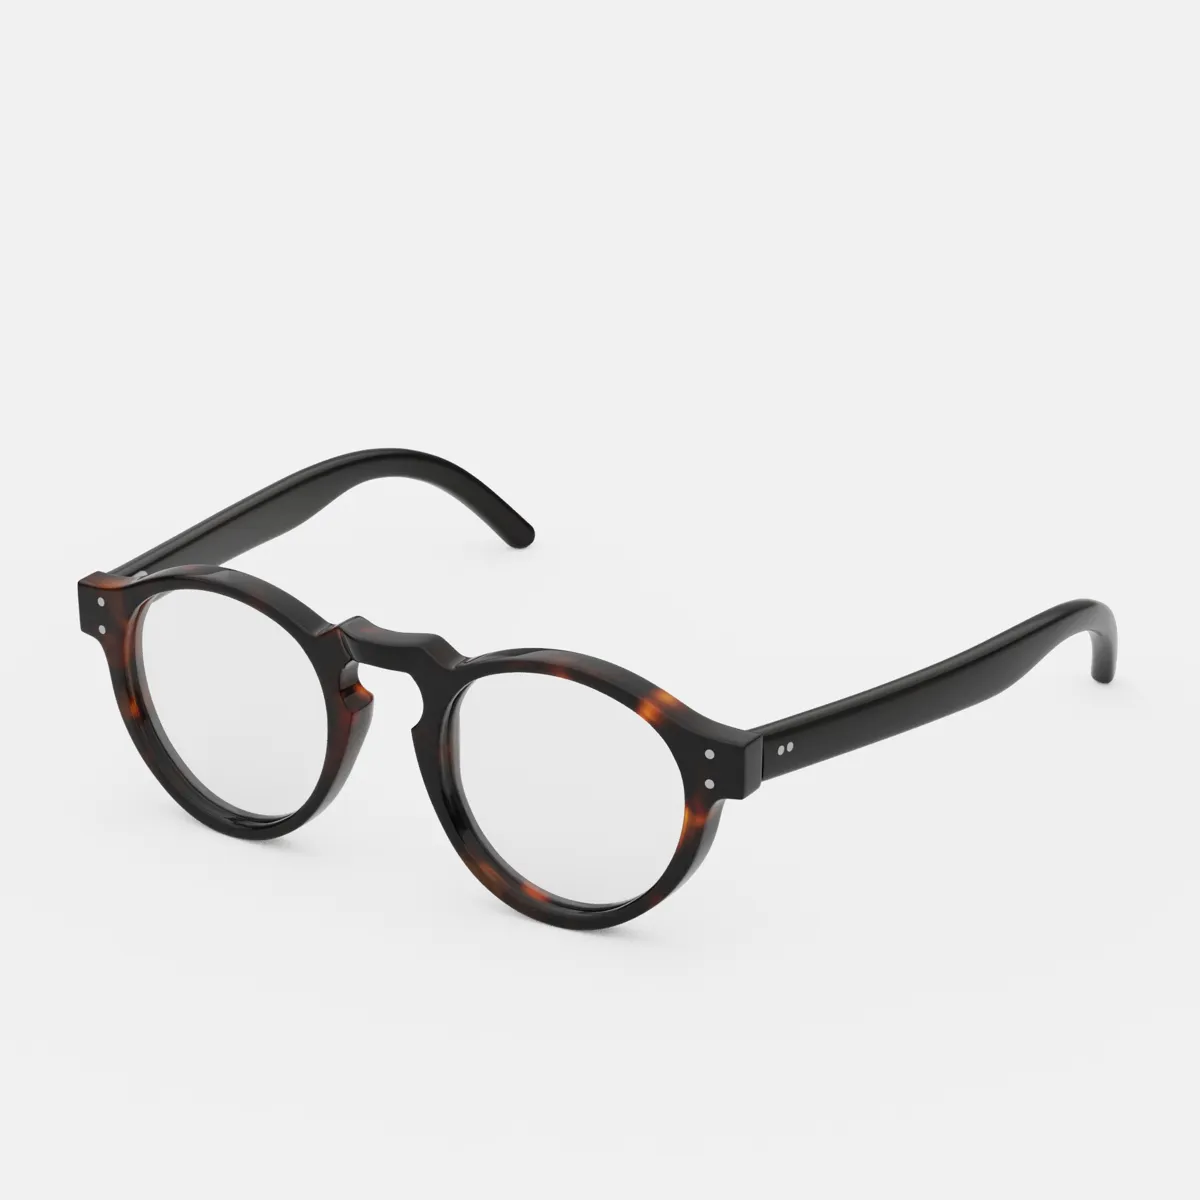 Delft Black Eyeglasses Frame